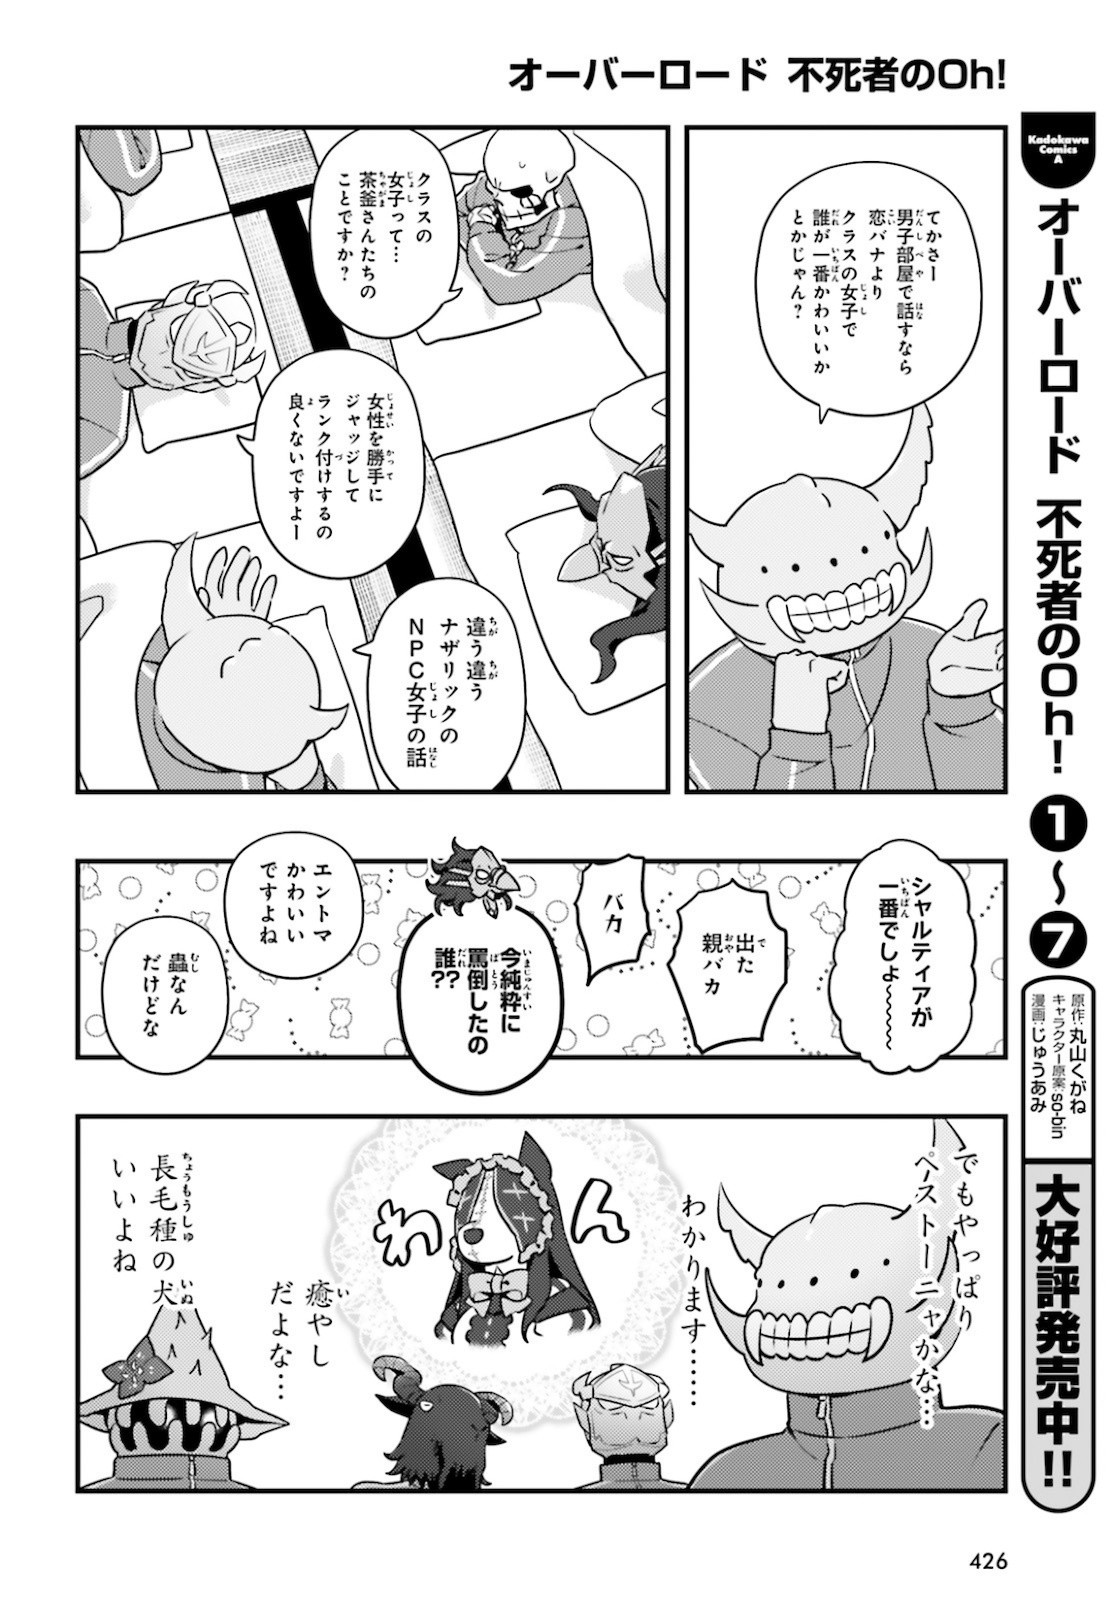 Overlord-Fushisha-no-Oh - Chapter 47 - Page 18